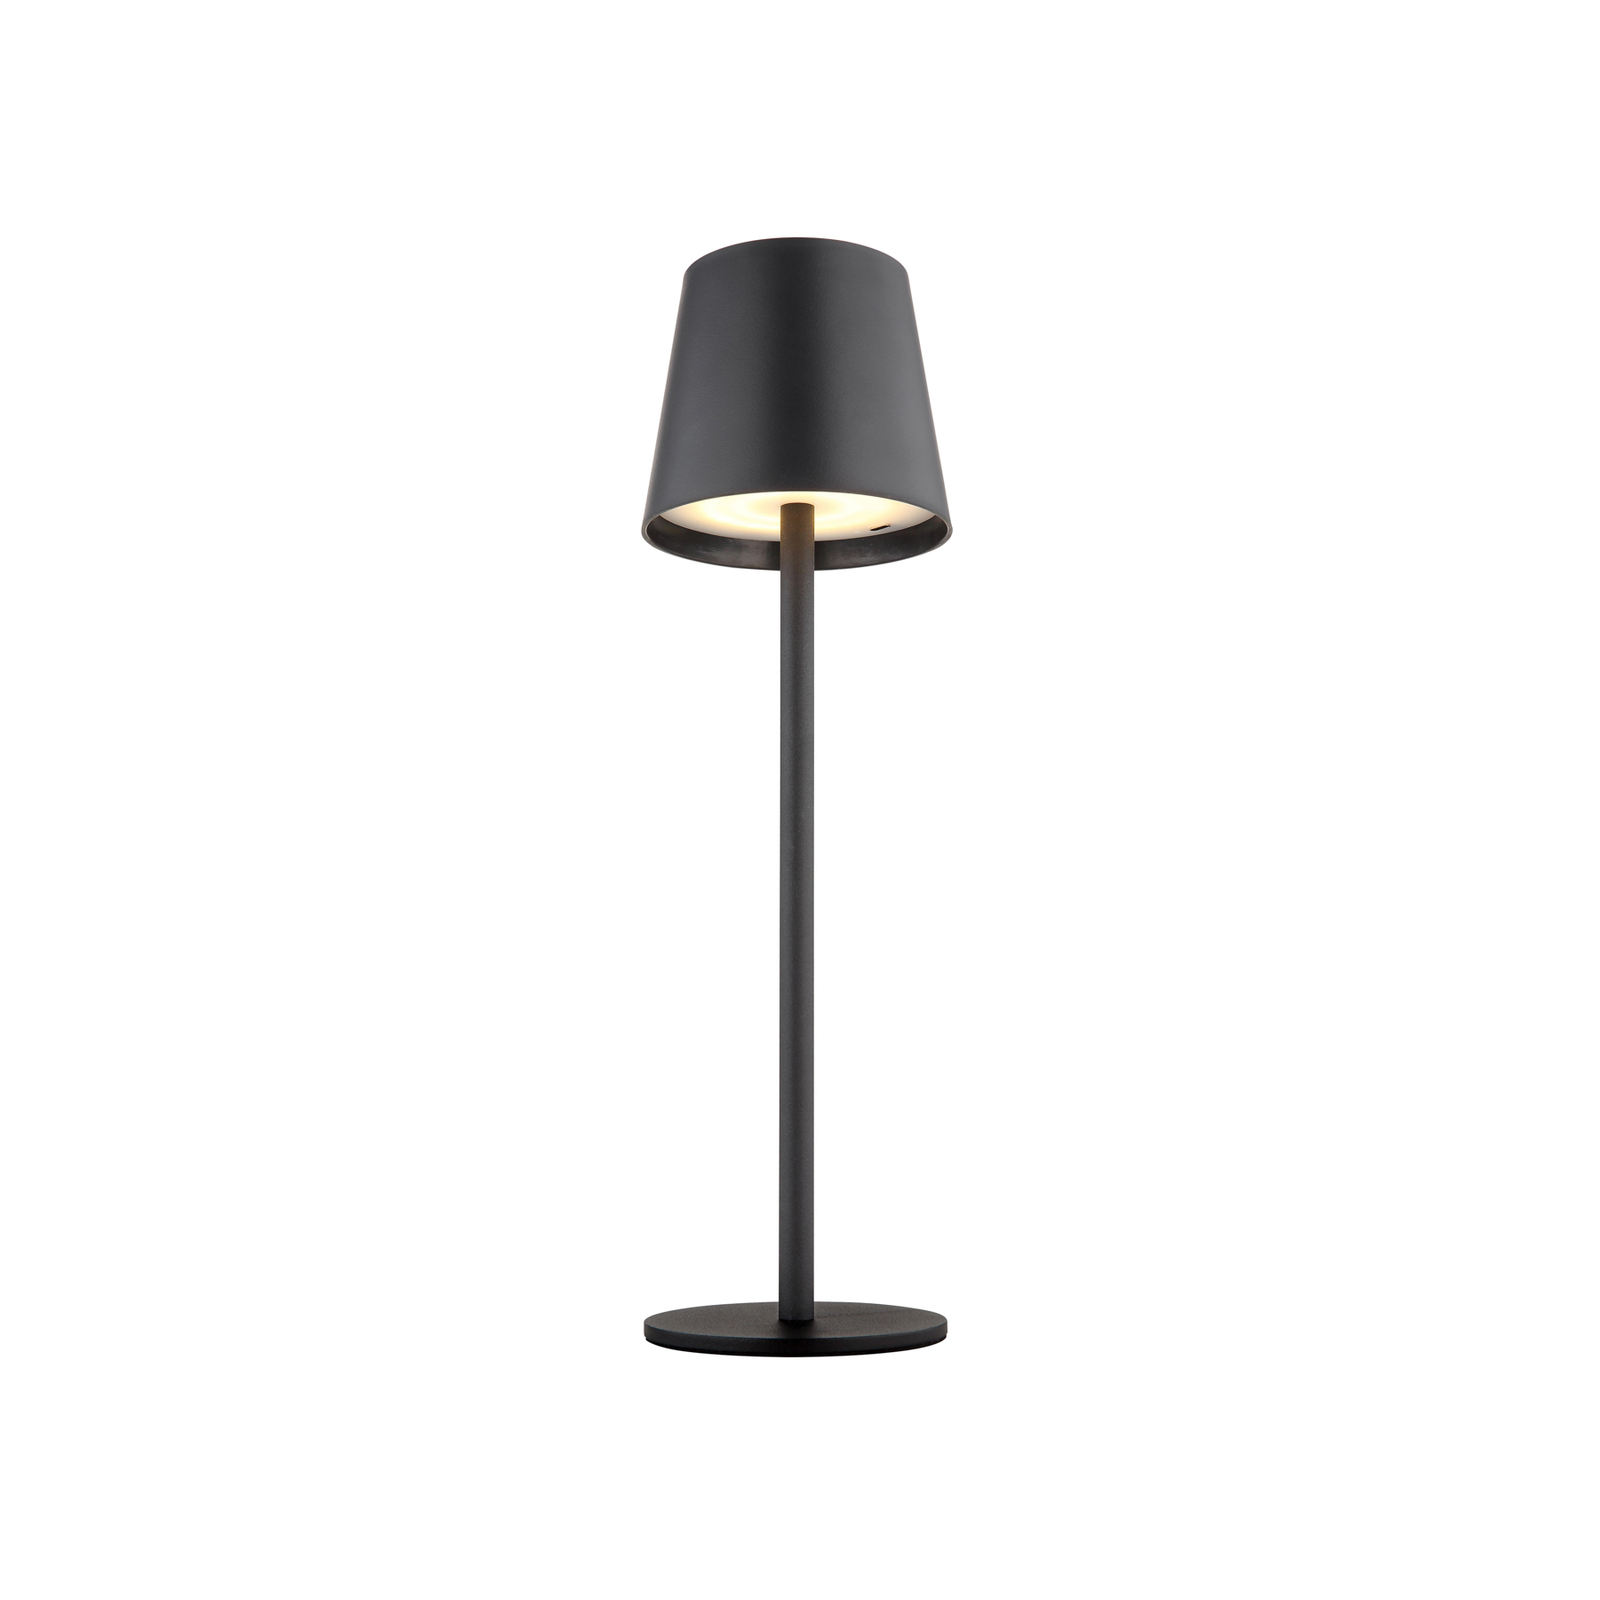 LED table lamp Vannie, black, height 36 cm, CCT